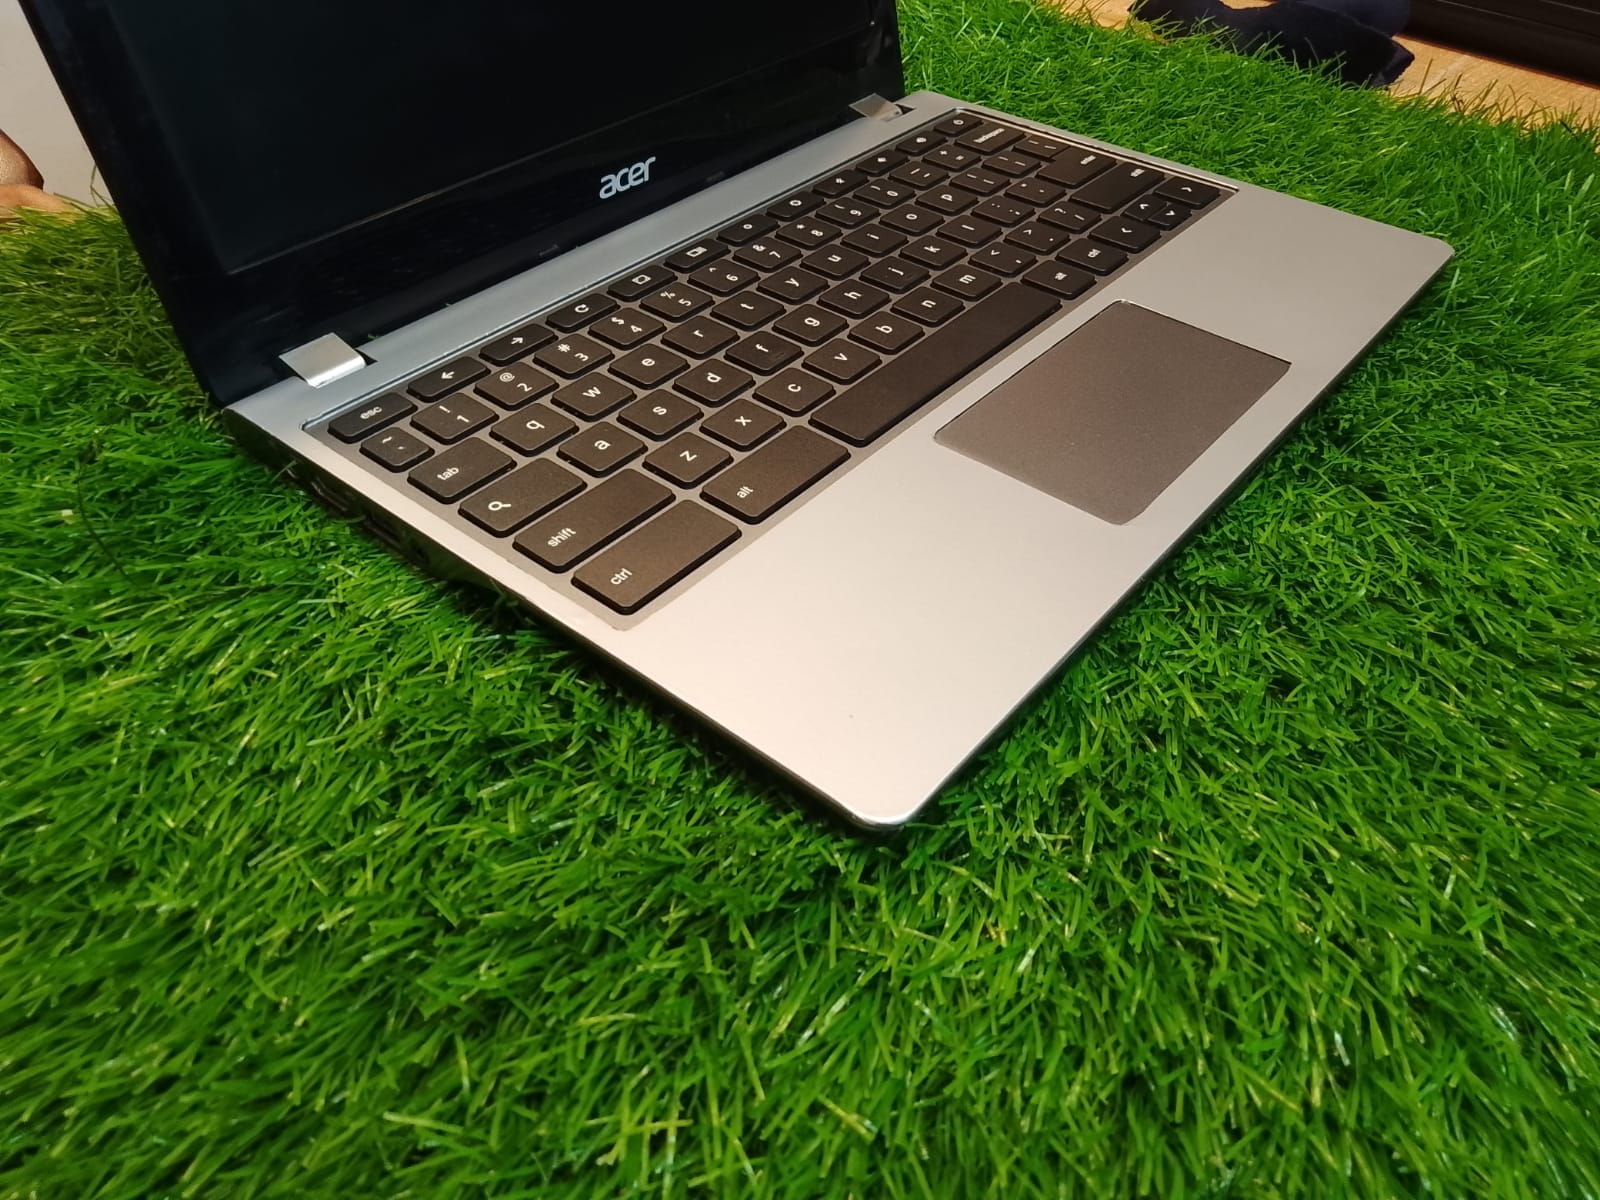 Acer Chromebook C740p Laptop Price in Pakistan